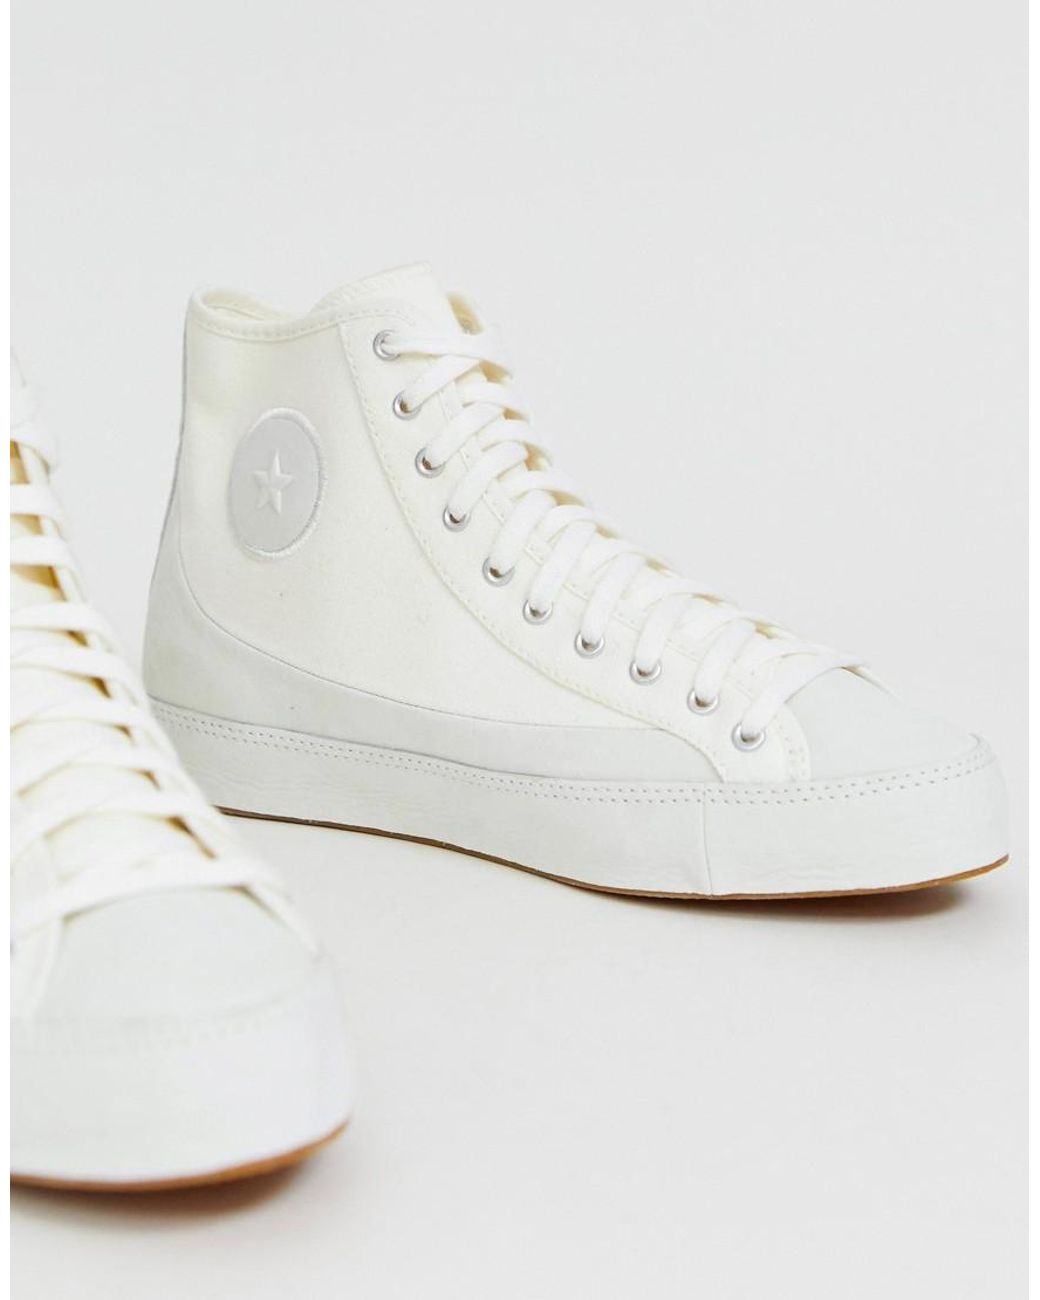 converse chuck taylor sasha vintage white trainers